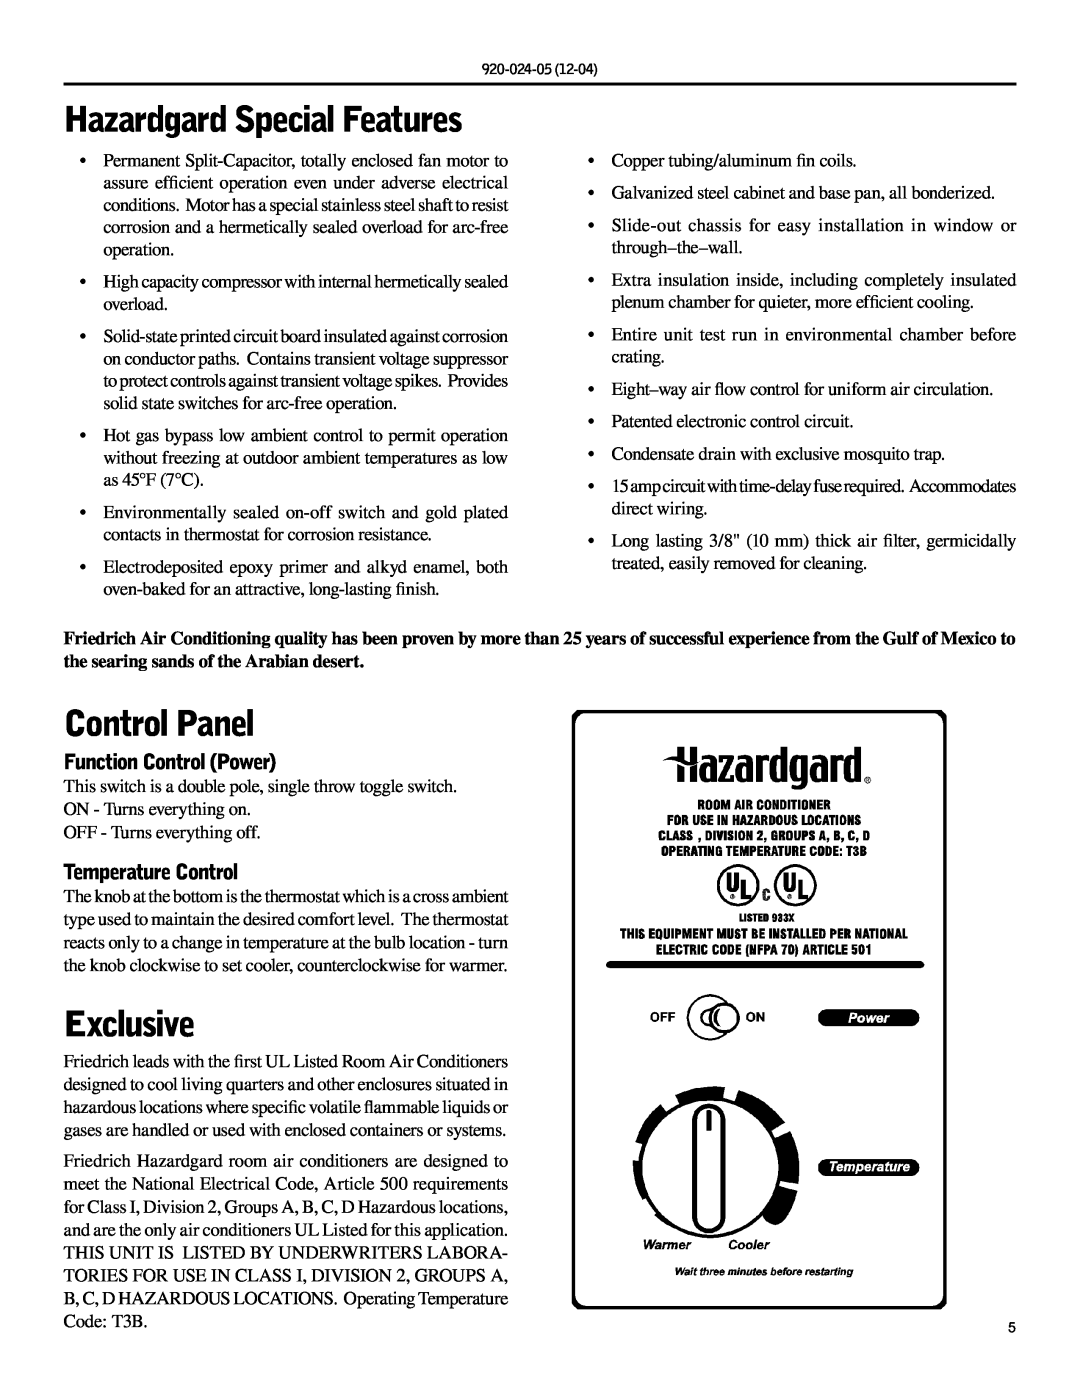 Friedrich SH20, SH15 Hazardgard Special Features, Control Panel, Exclusive, Function Control Power, Temperature Control 